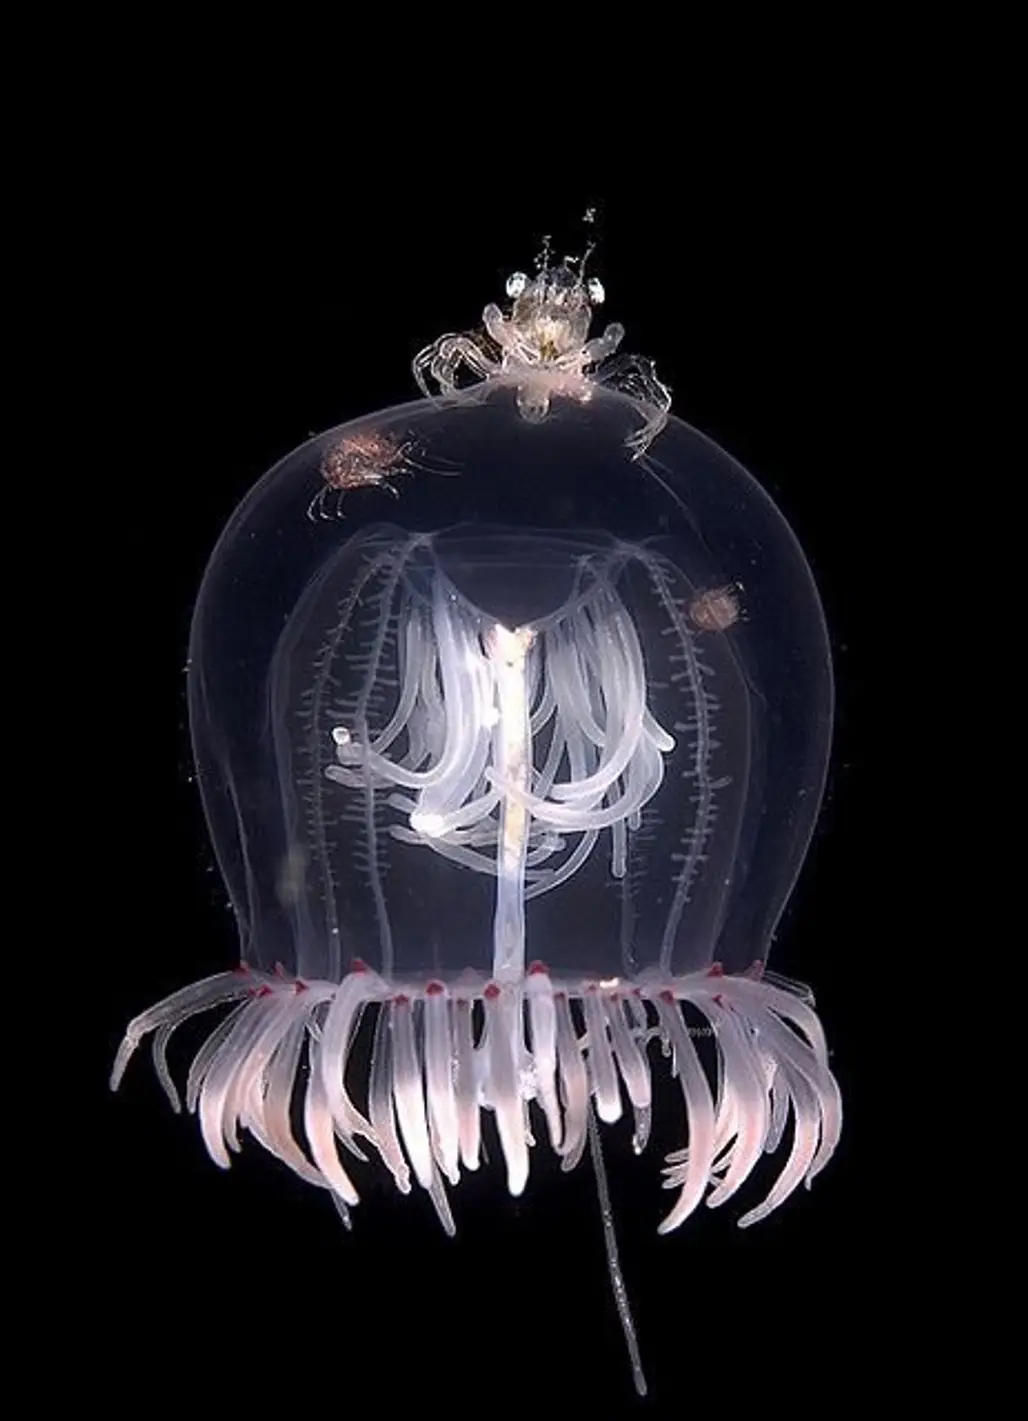 Small Crab on Red Eyed Medusa Jellyfish